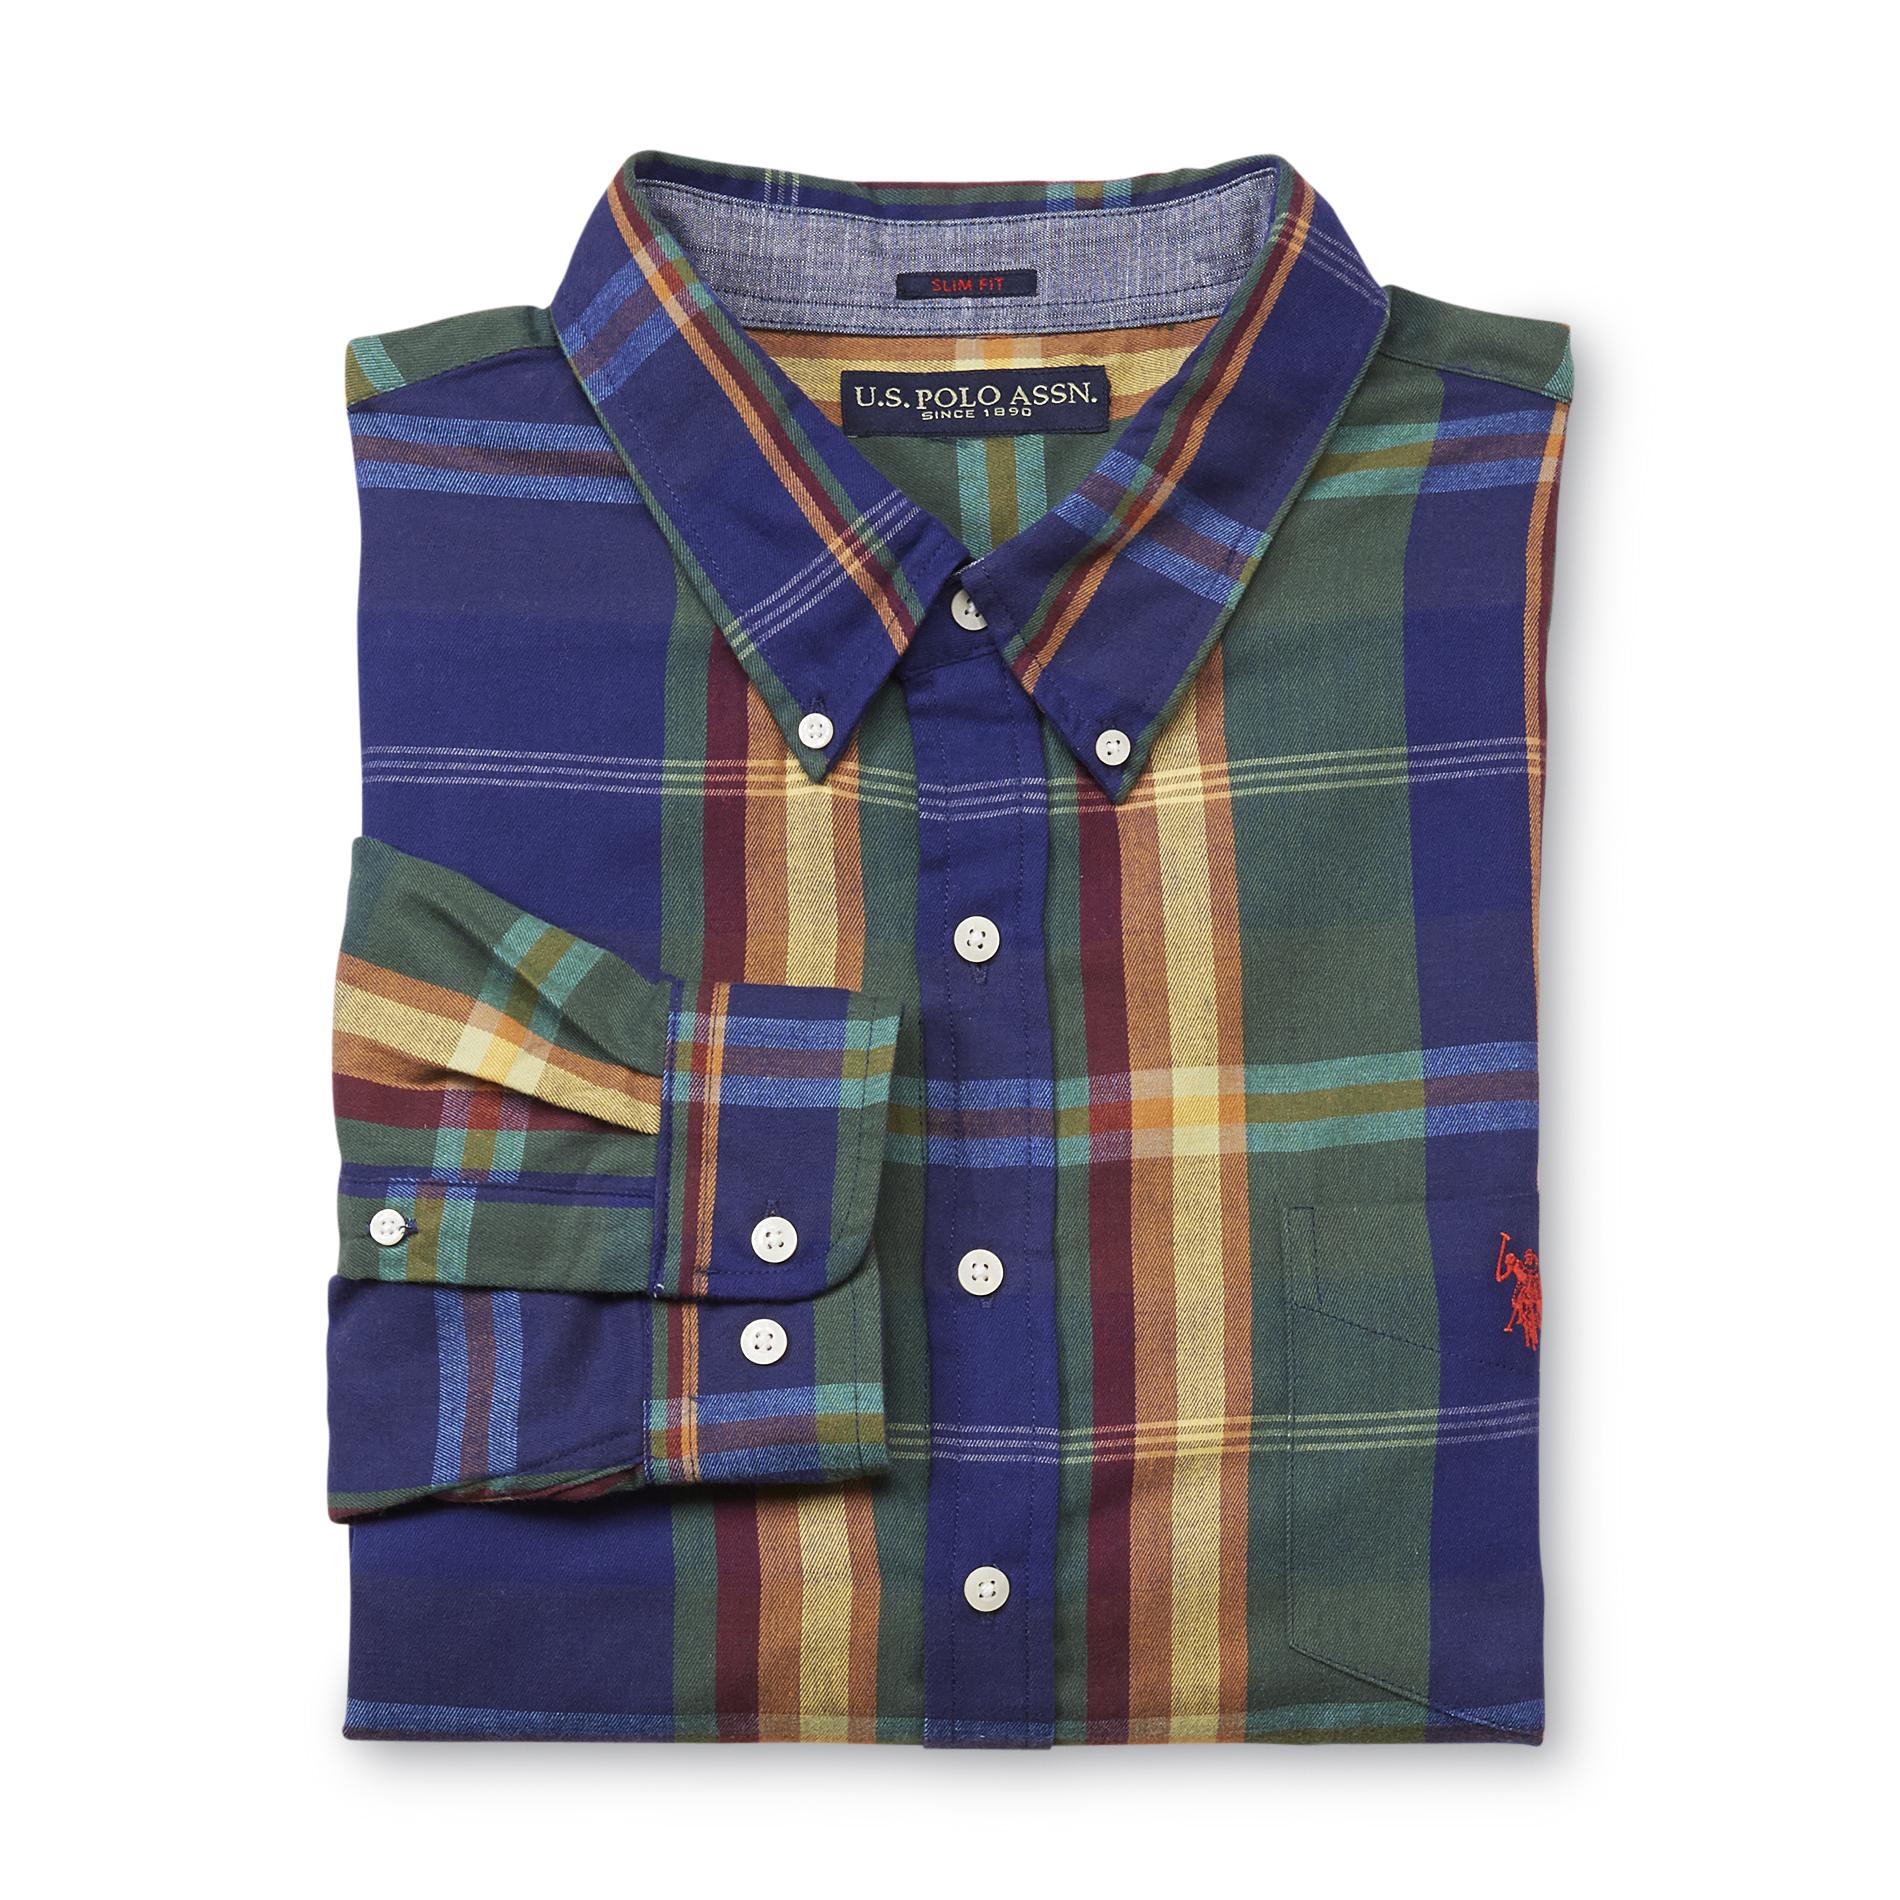 U.S. Polo Assn. Men's Long-Sleeve Flannel Shirt - Plaid